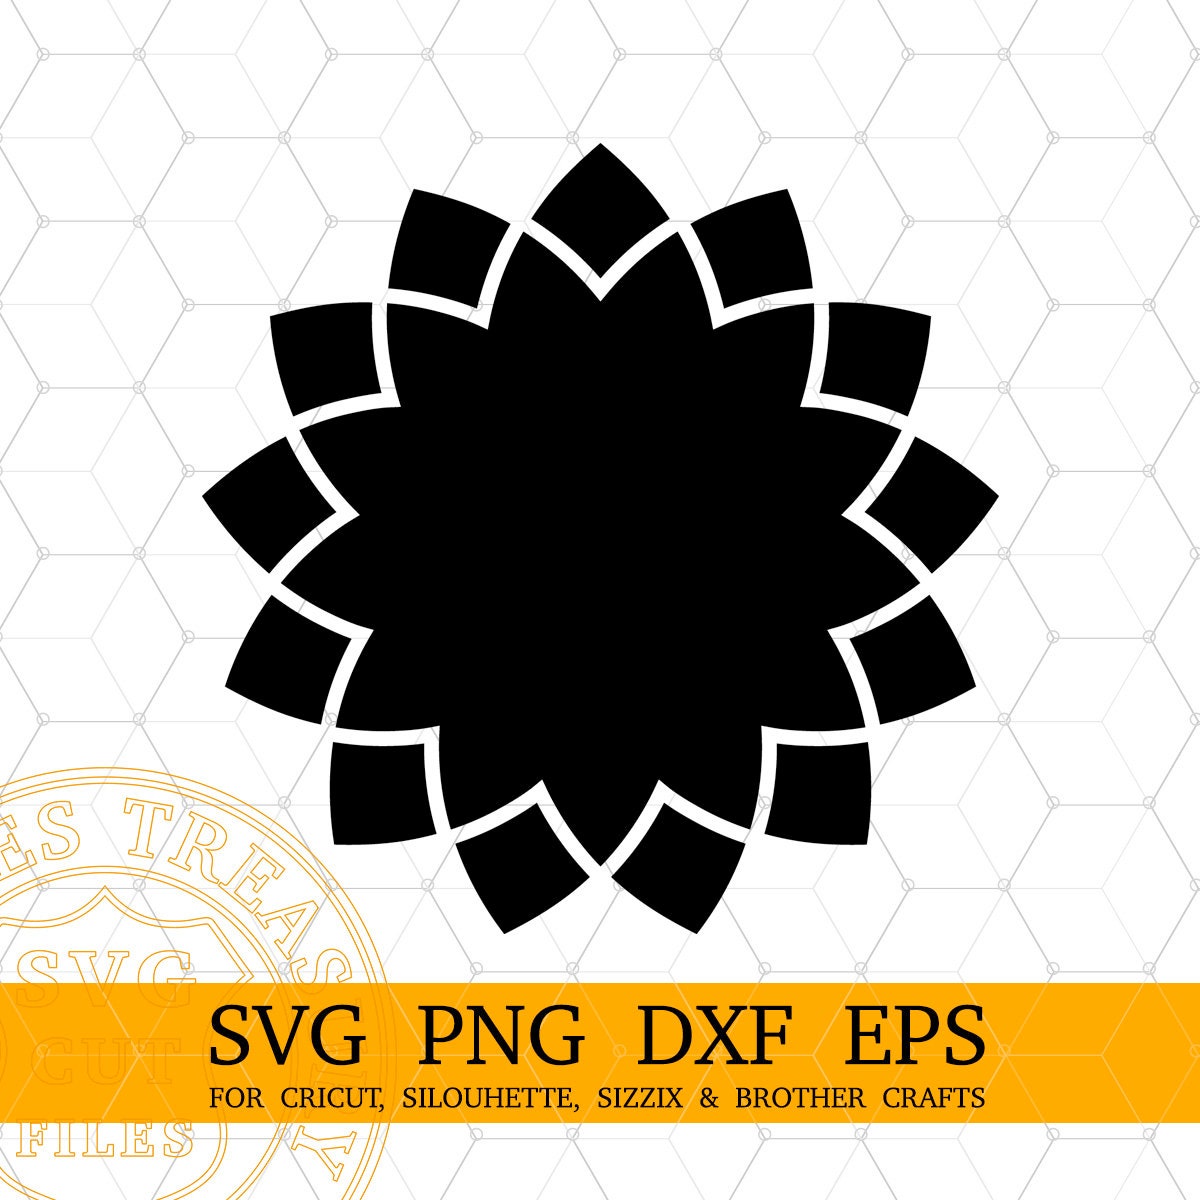 Basic Circle Monogram Frames Svg Png Dxf Eps Files